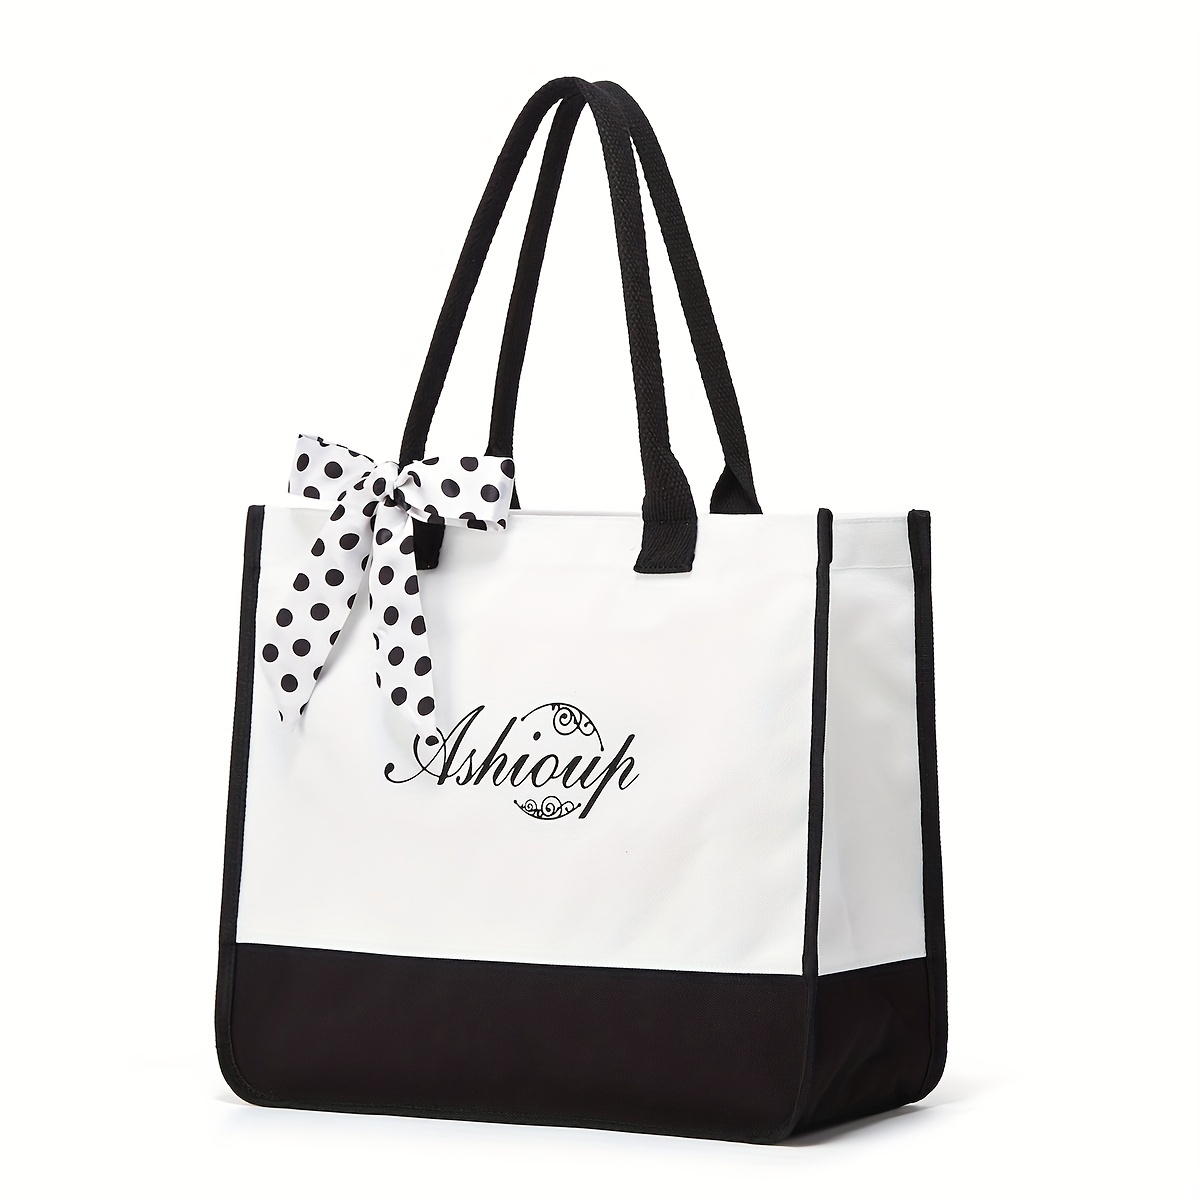 aliwood Nylon Women Shoulder Bags Waterproof Tote Beach Bag Handbag Letter  Printing Casual Large Capacity Travel Shopping bags